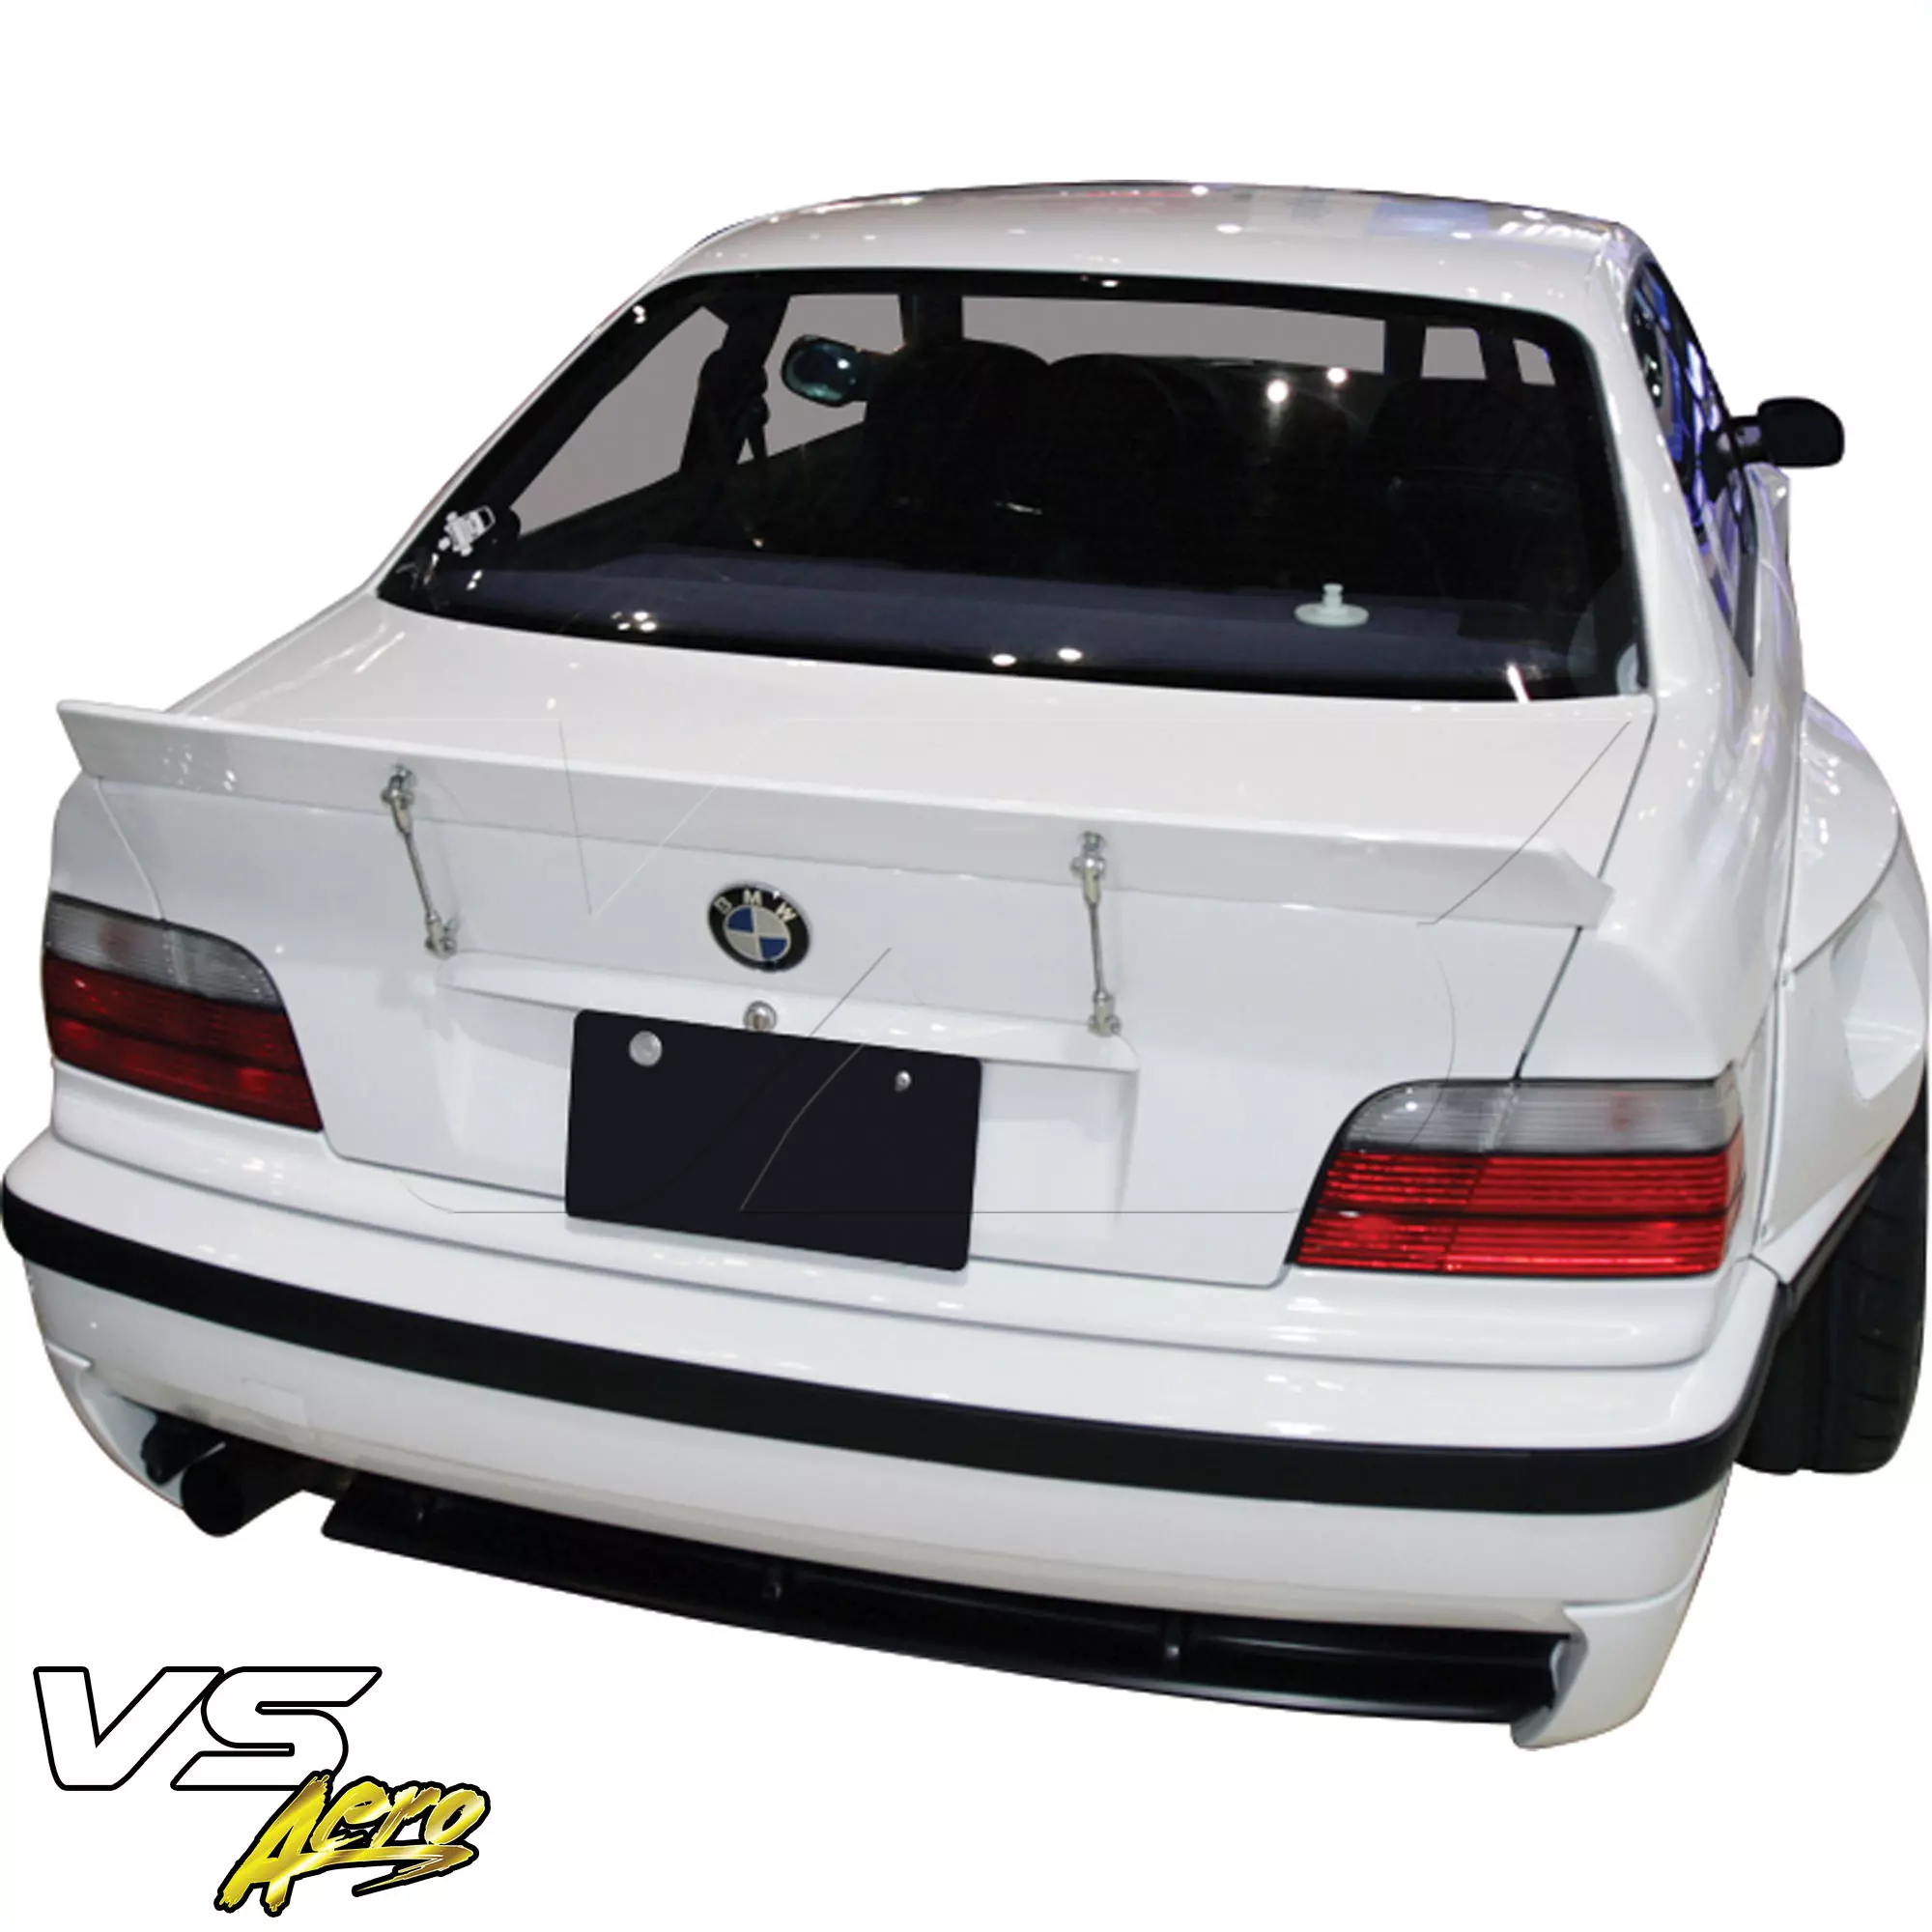 VSaero FRP TKYO Spoiler Wing > BMW 3-Series 325i 328i E36 1992-1998 > 2dr Coupe - Image 2